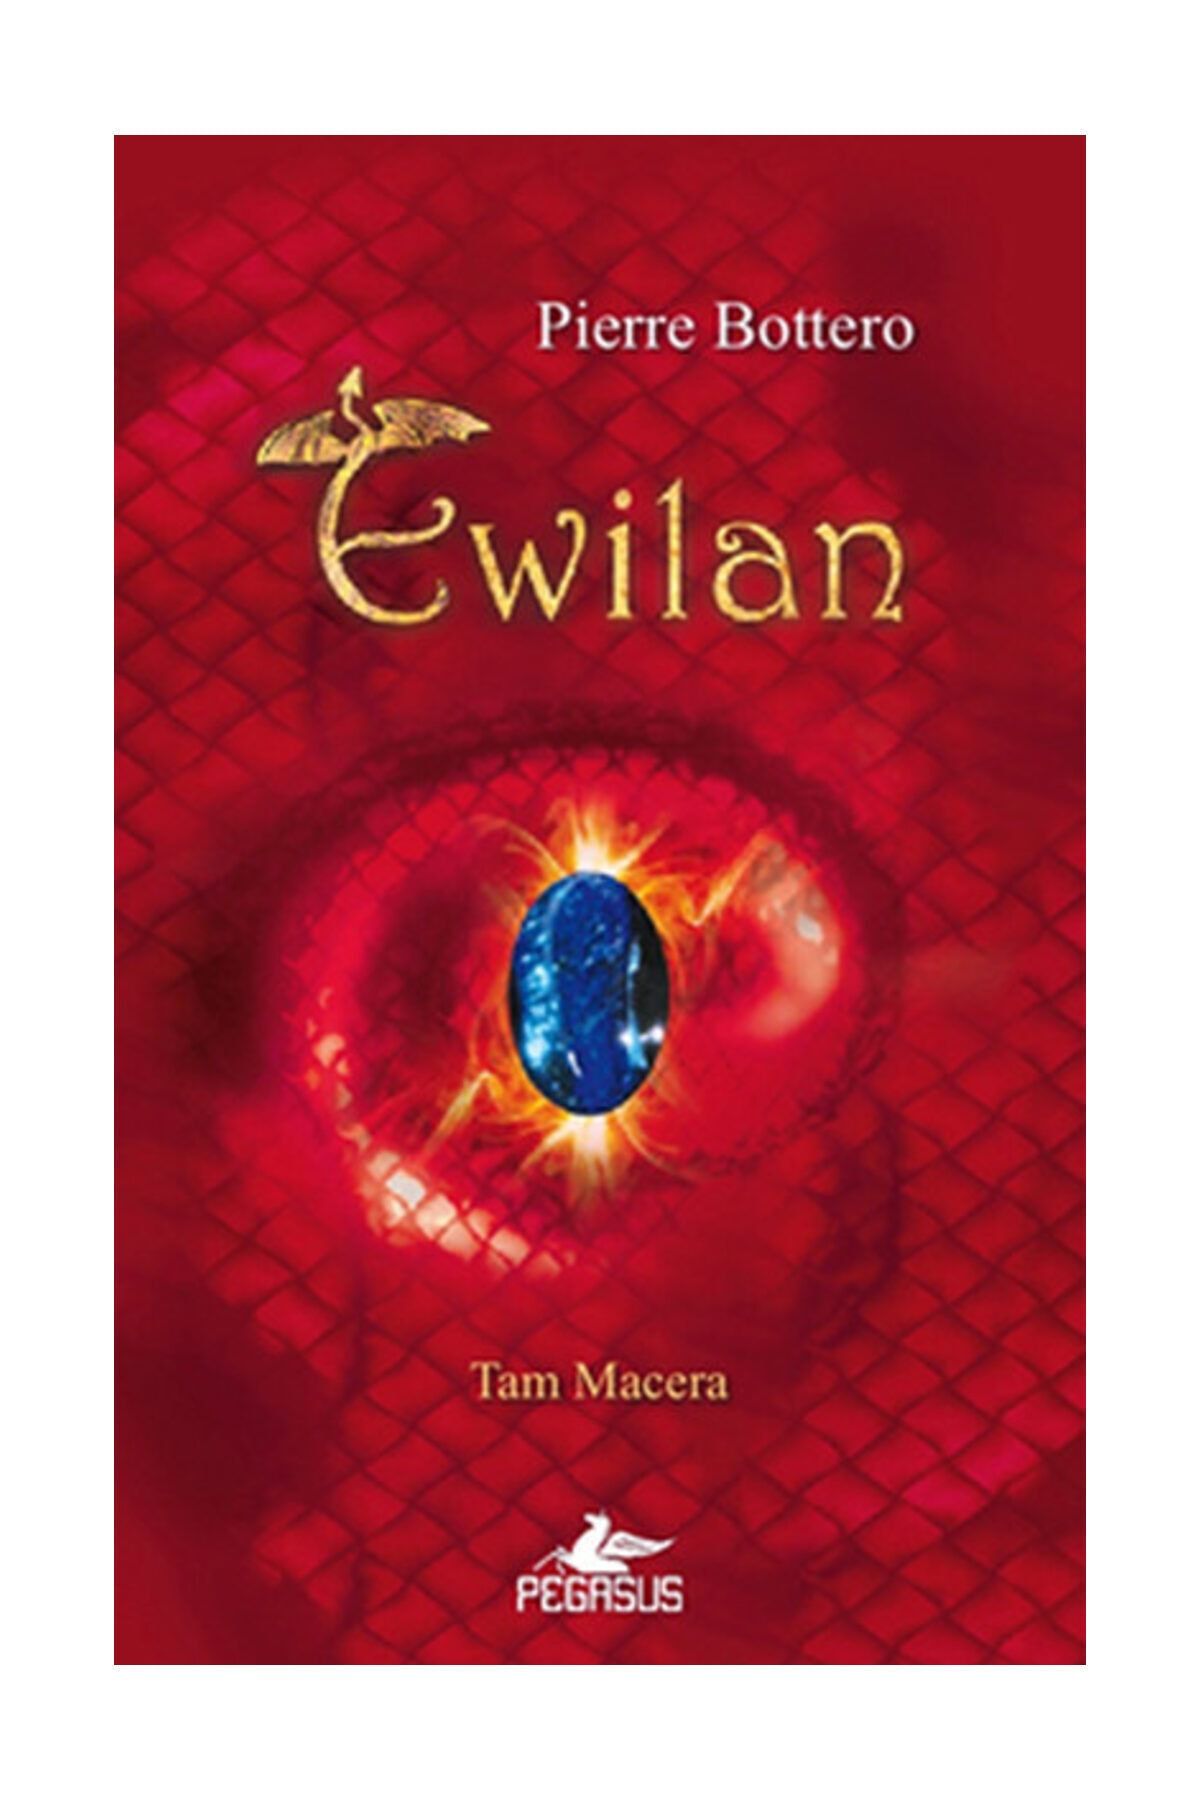 Pegasus Yayınları Ewilan - Tam Macera & Pierre Bottero